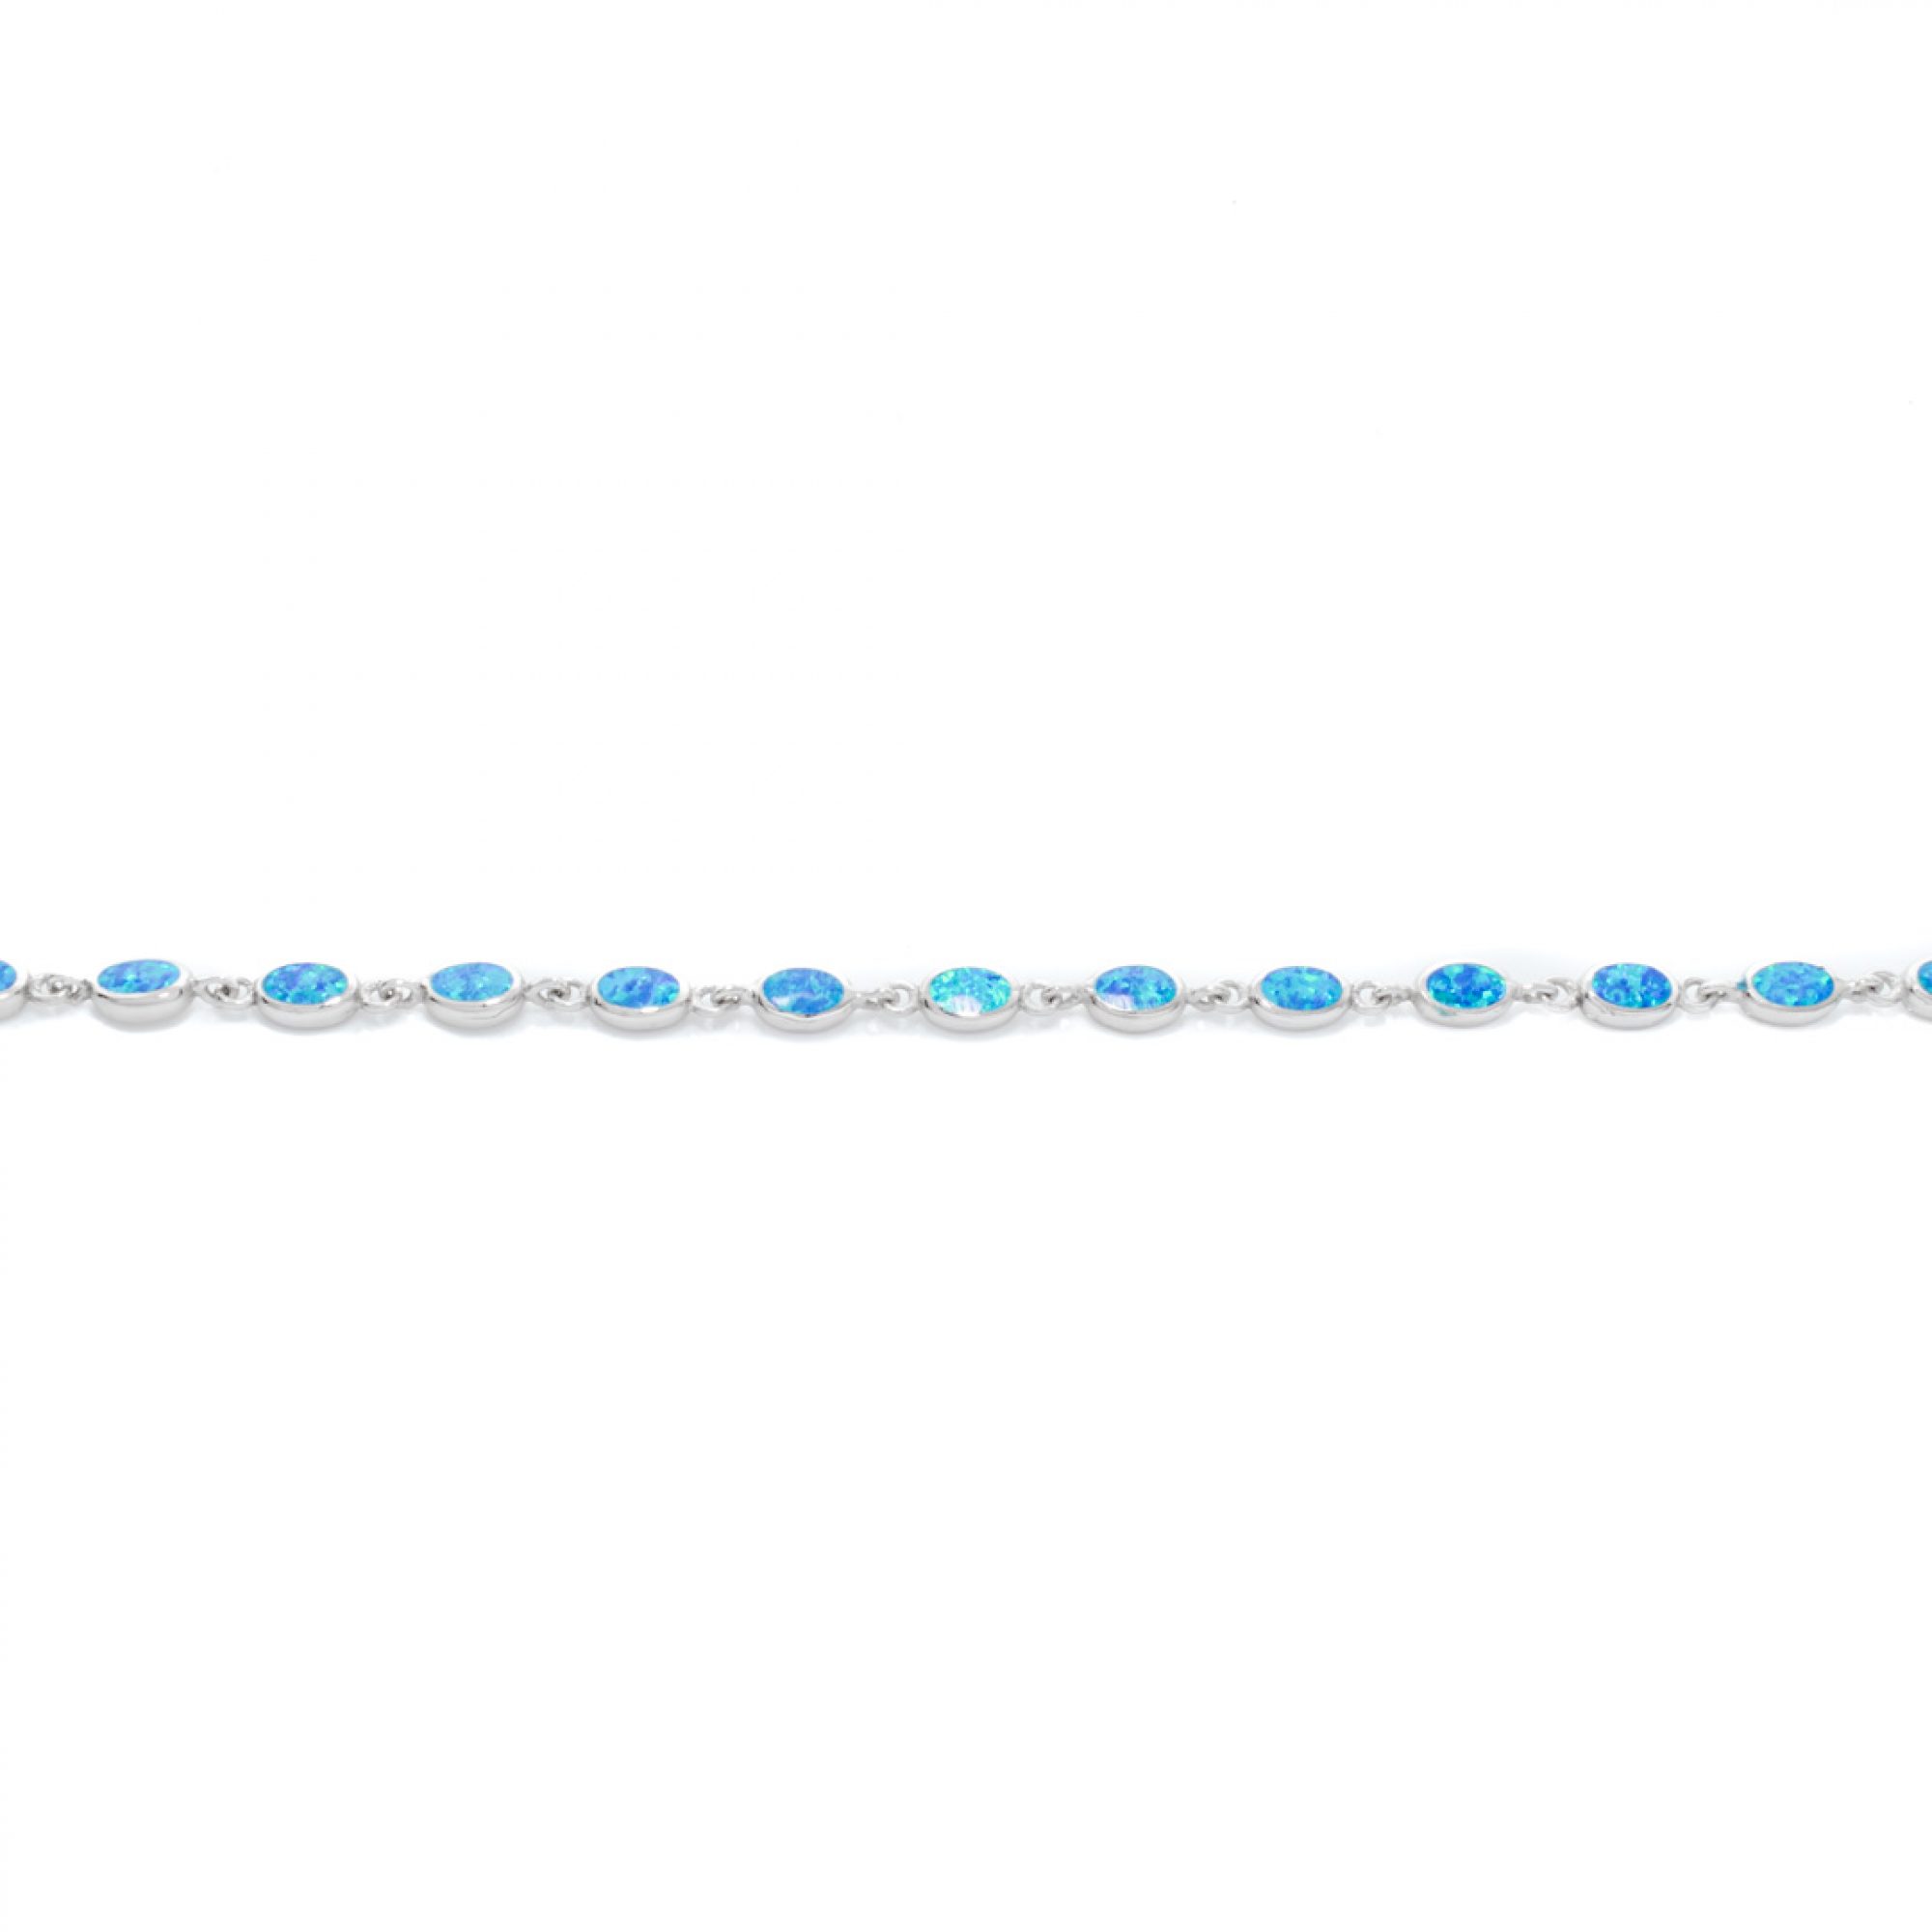 Bracelet with opal stones